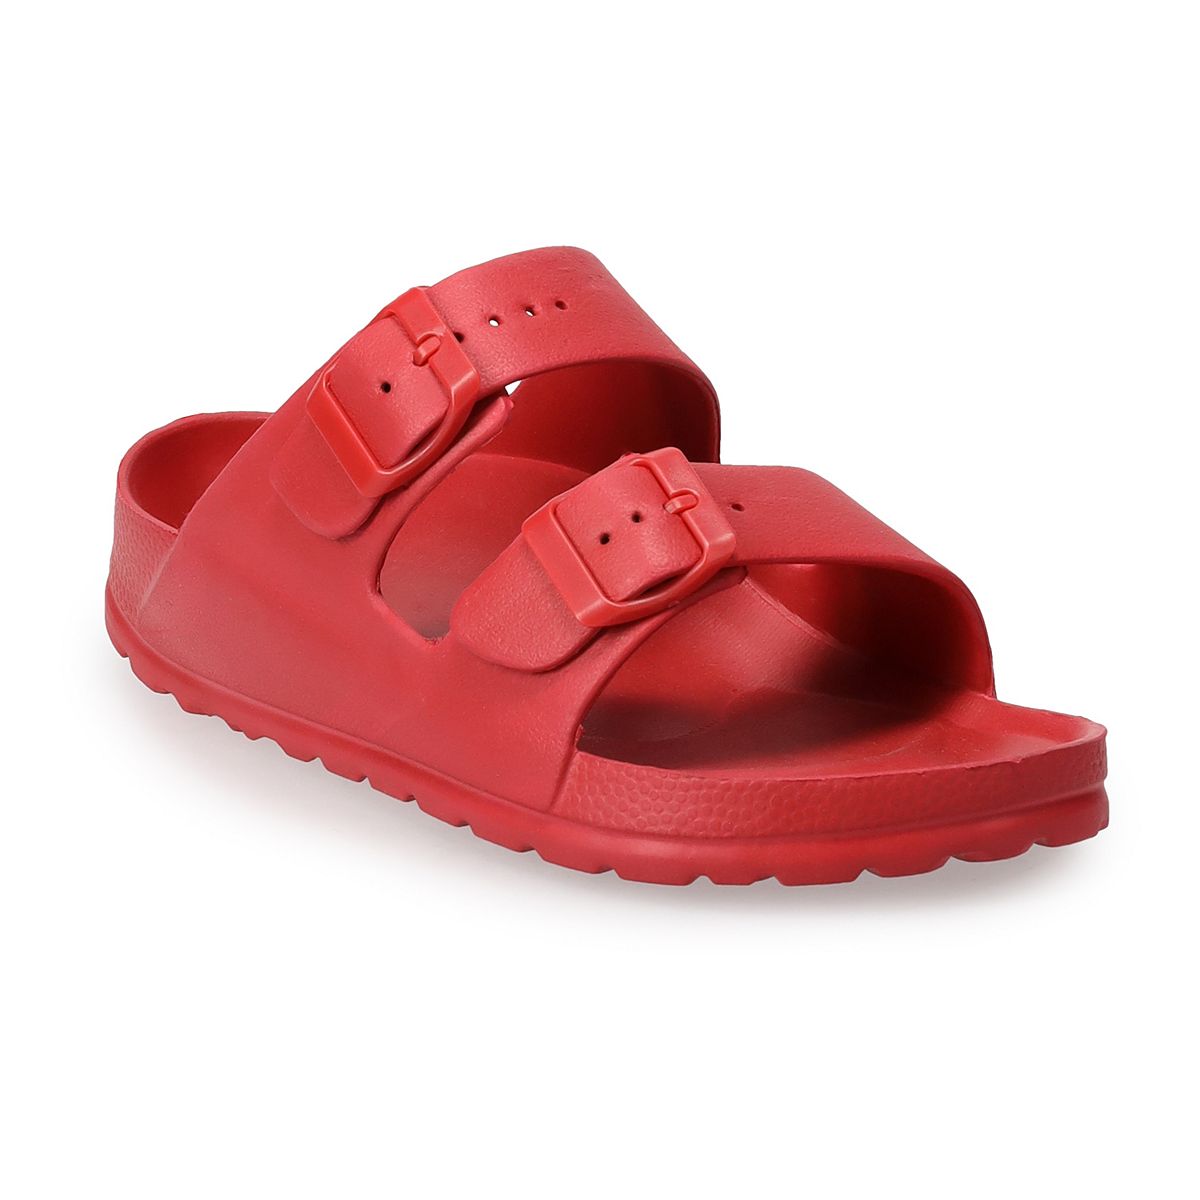 SO Passion Fruit Women's Slide Sandals